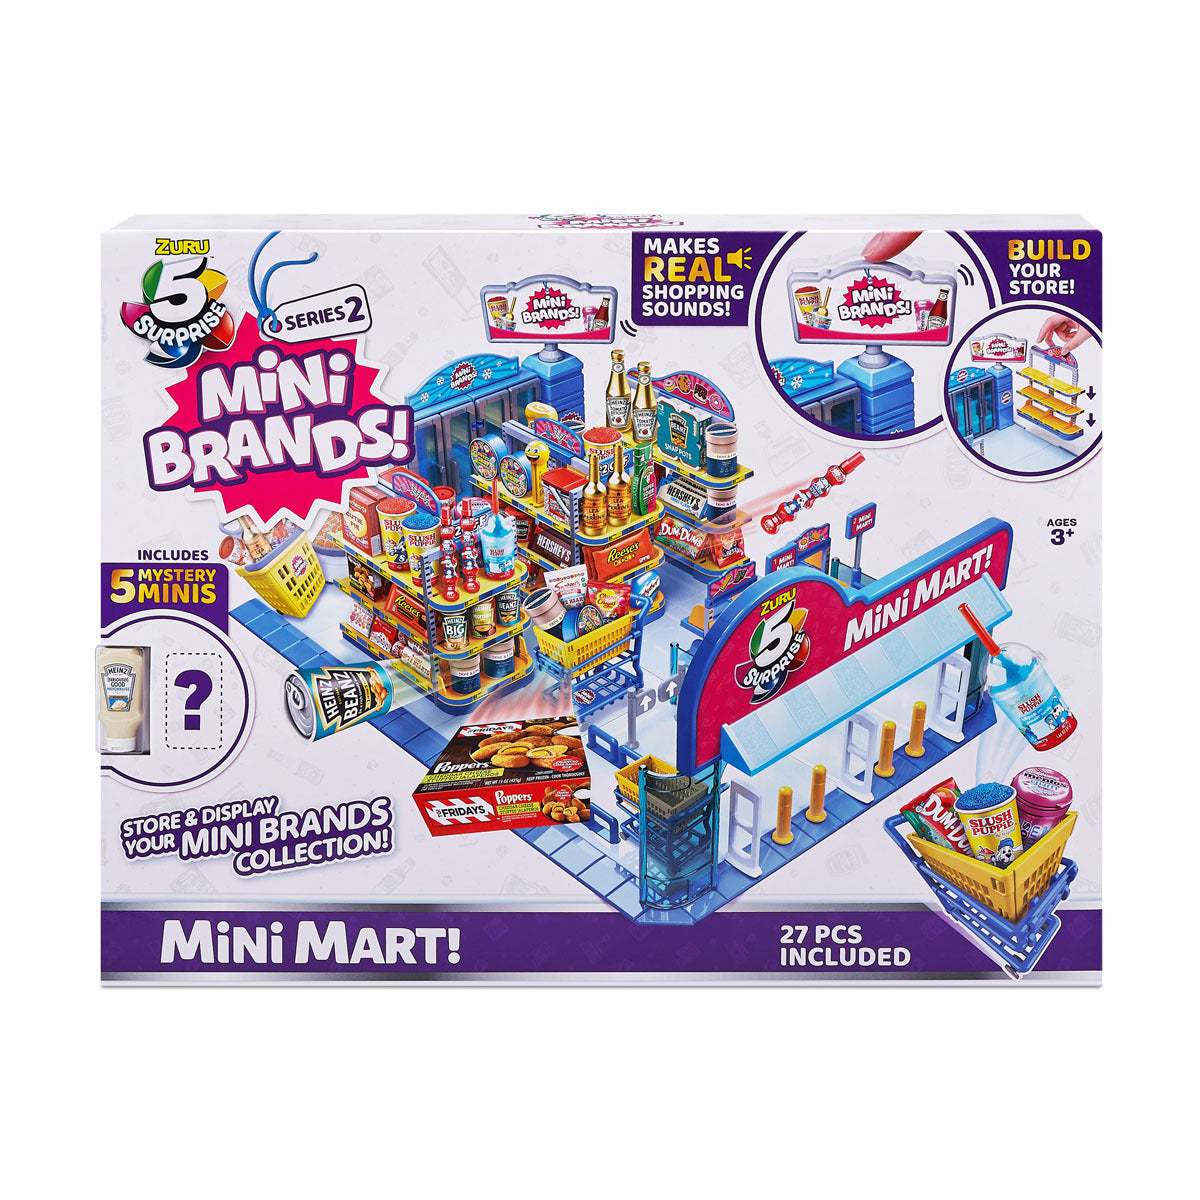 5 Surprise Mini Brands Mini Mart Set by ZURU (Series 2)